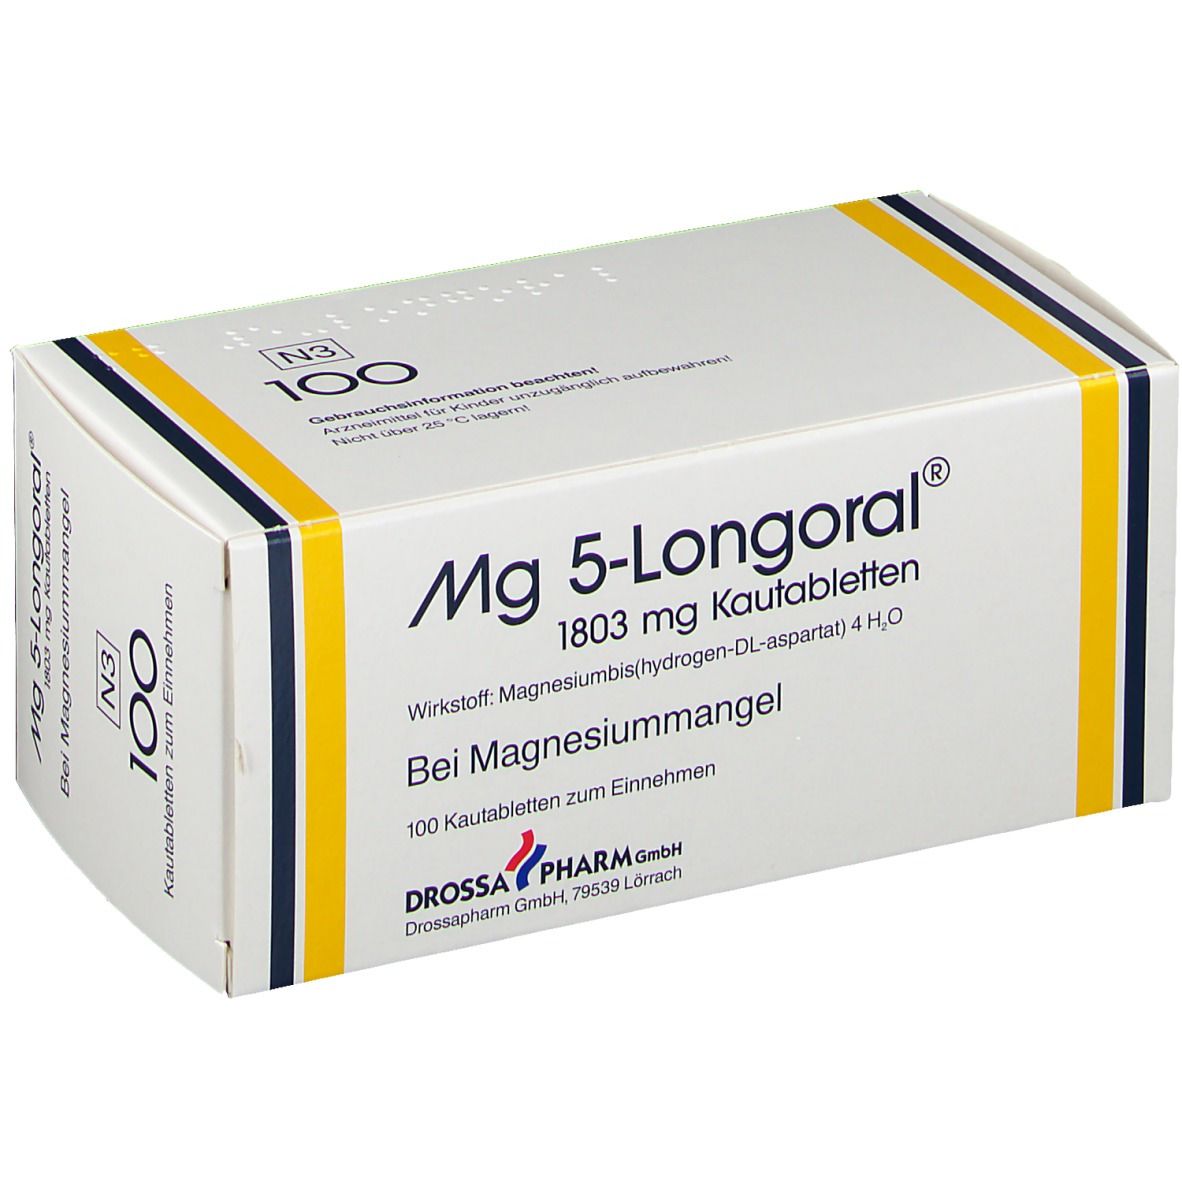 Mg 5-Longoral® 1803 mg